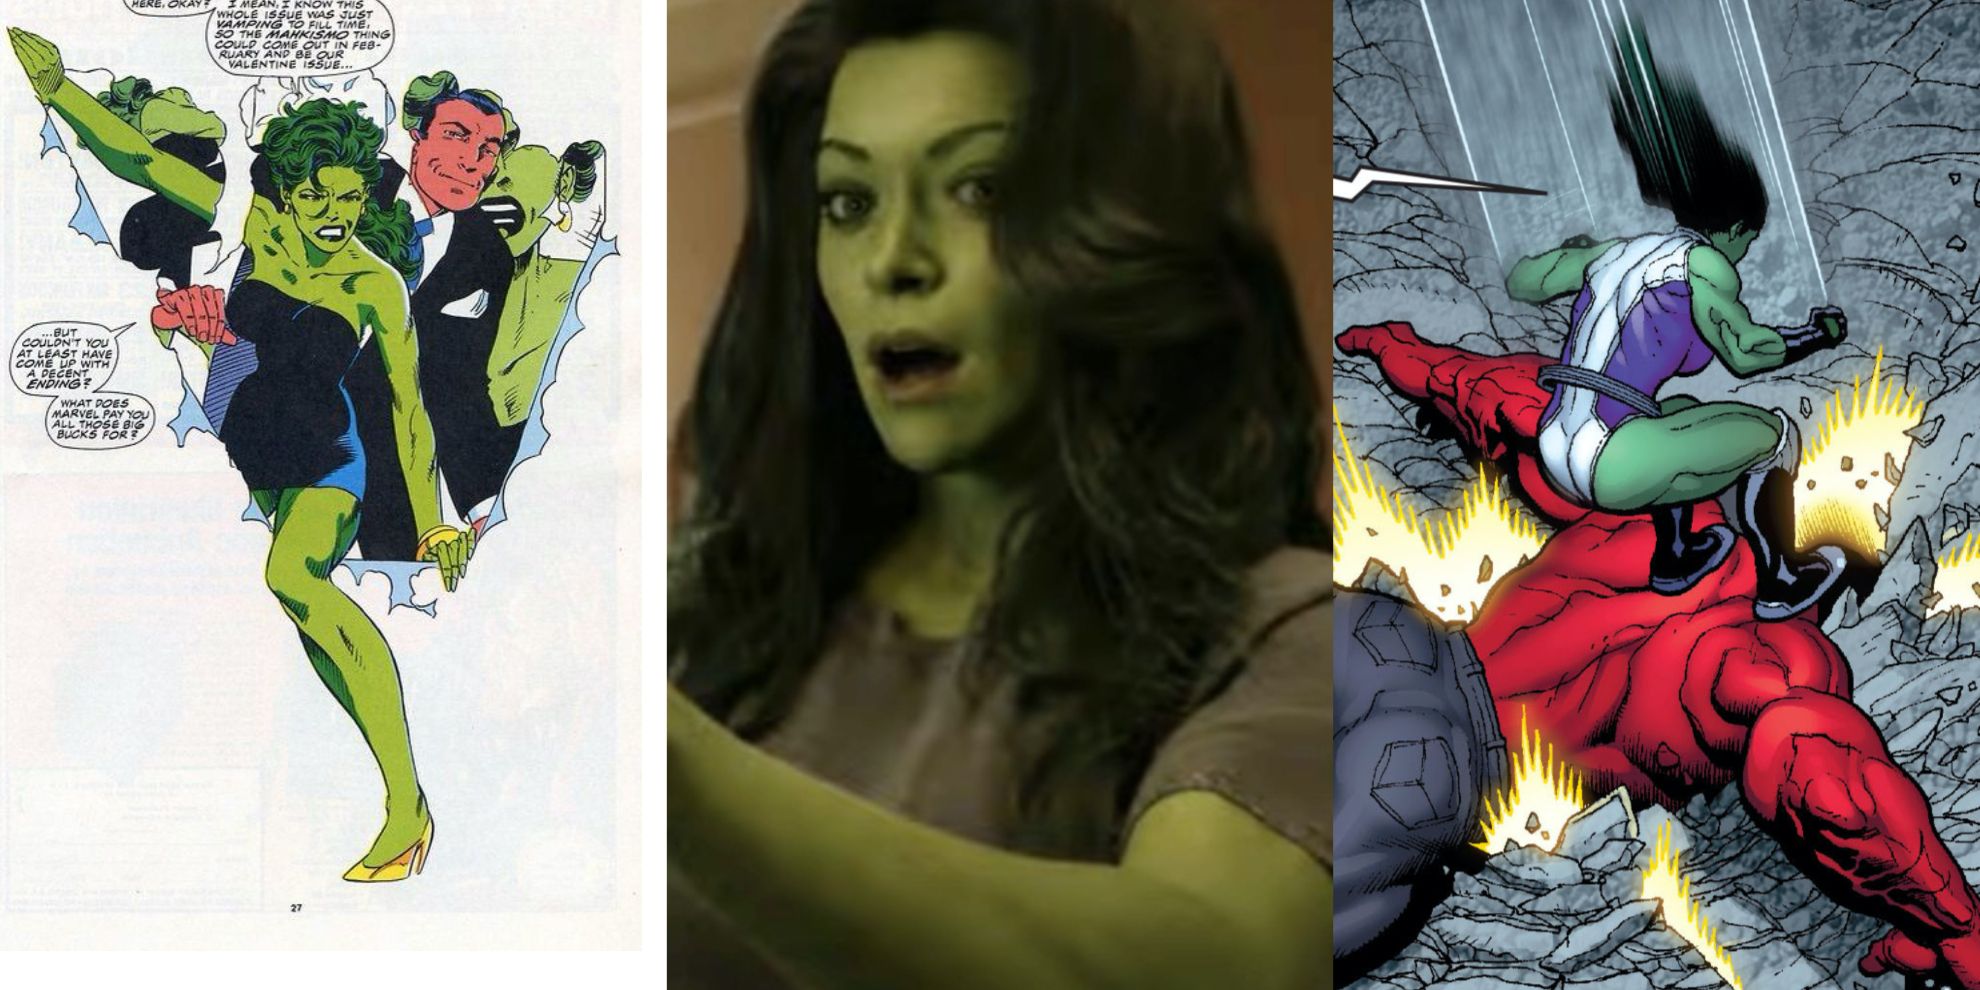 Split image of She-Hulk tearing through comic page, She-Hulk from MCU, and She-hulk landing on Red Hulk in Marvel Comics